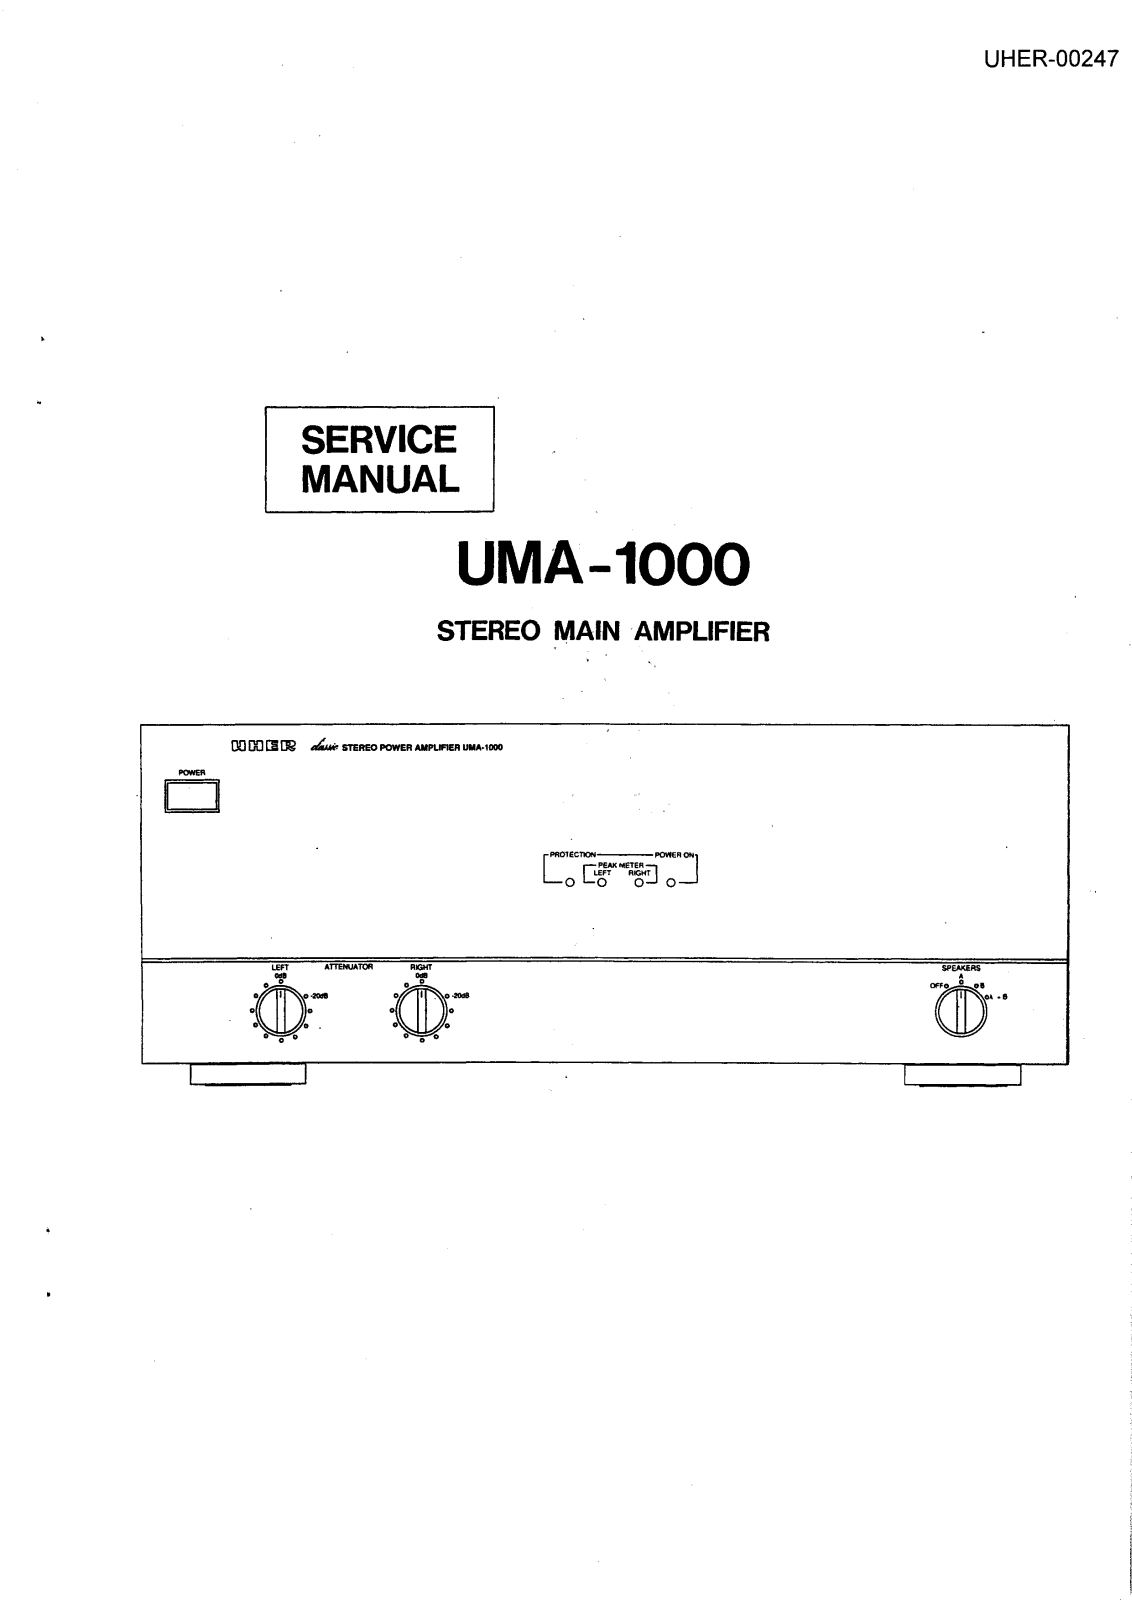 Uher UMA-1000 Service manual